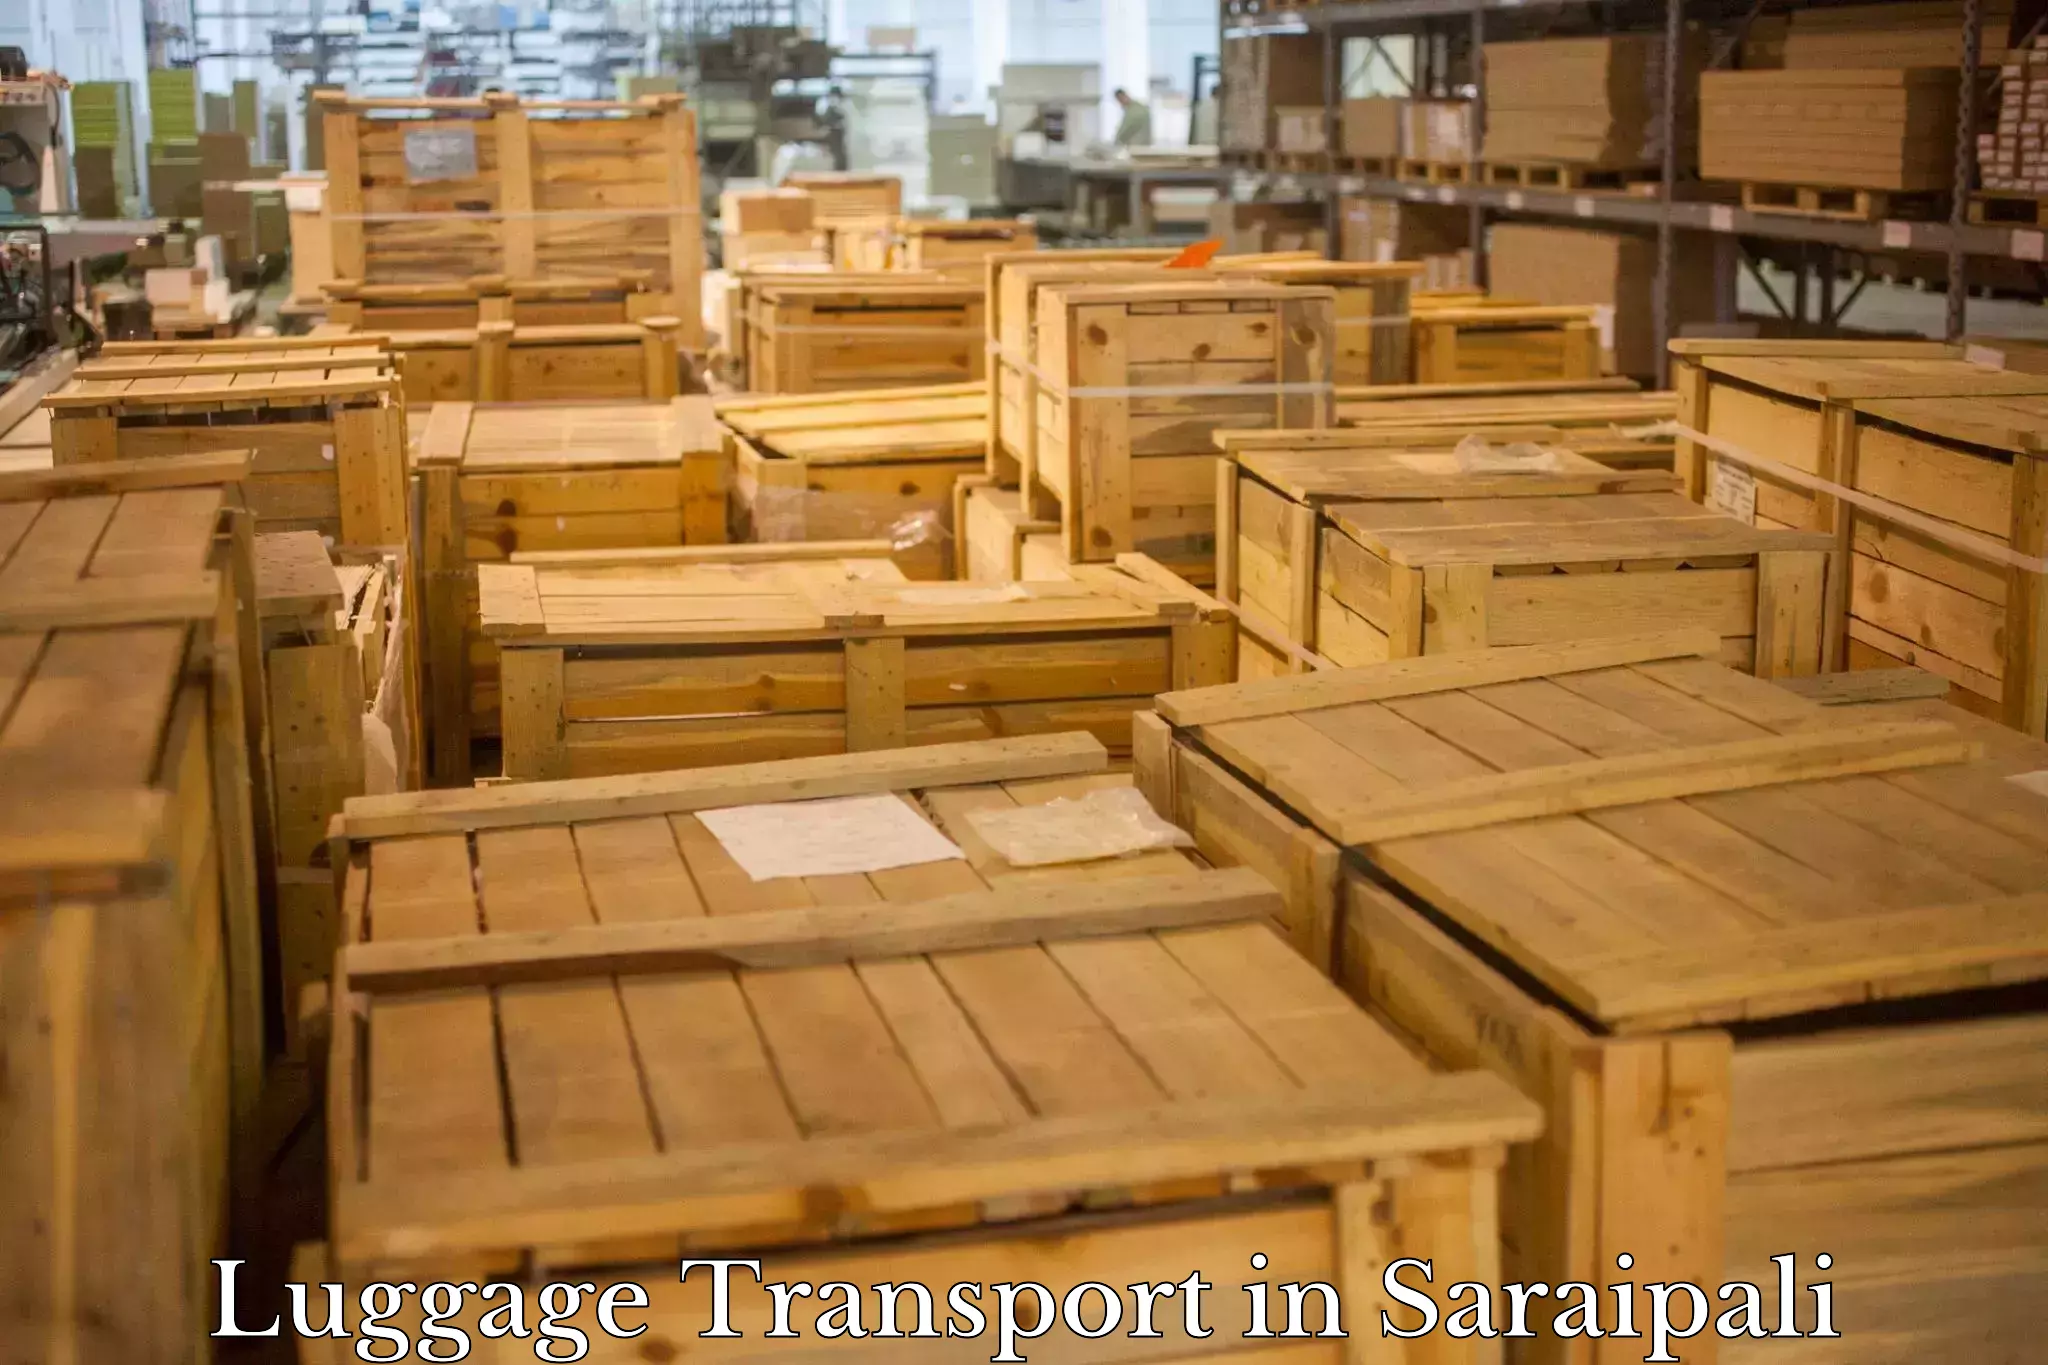 Luggage shipment tracking in Saraipali